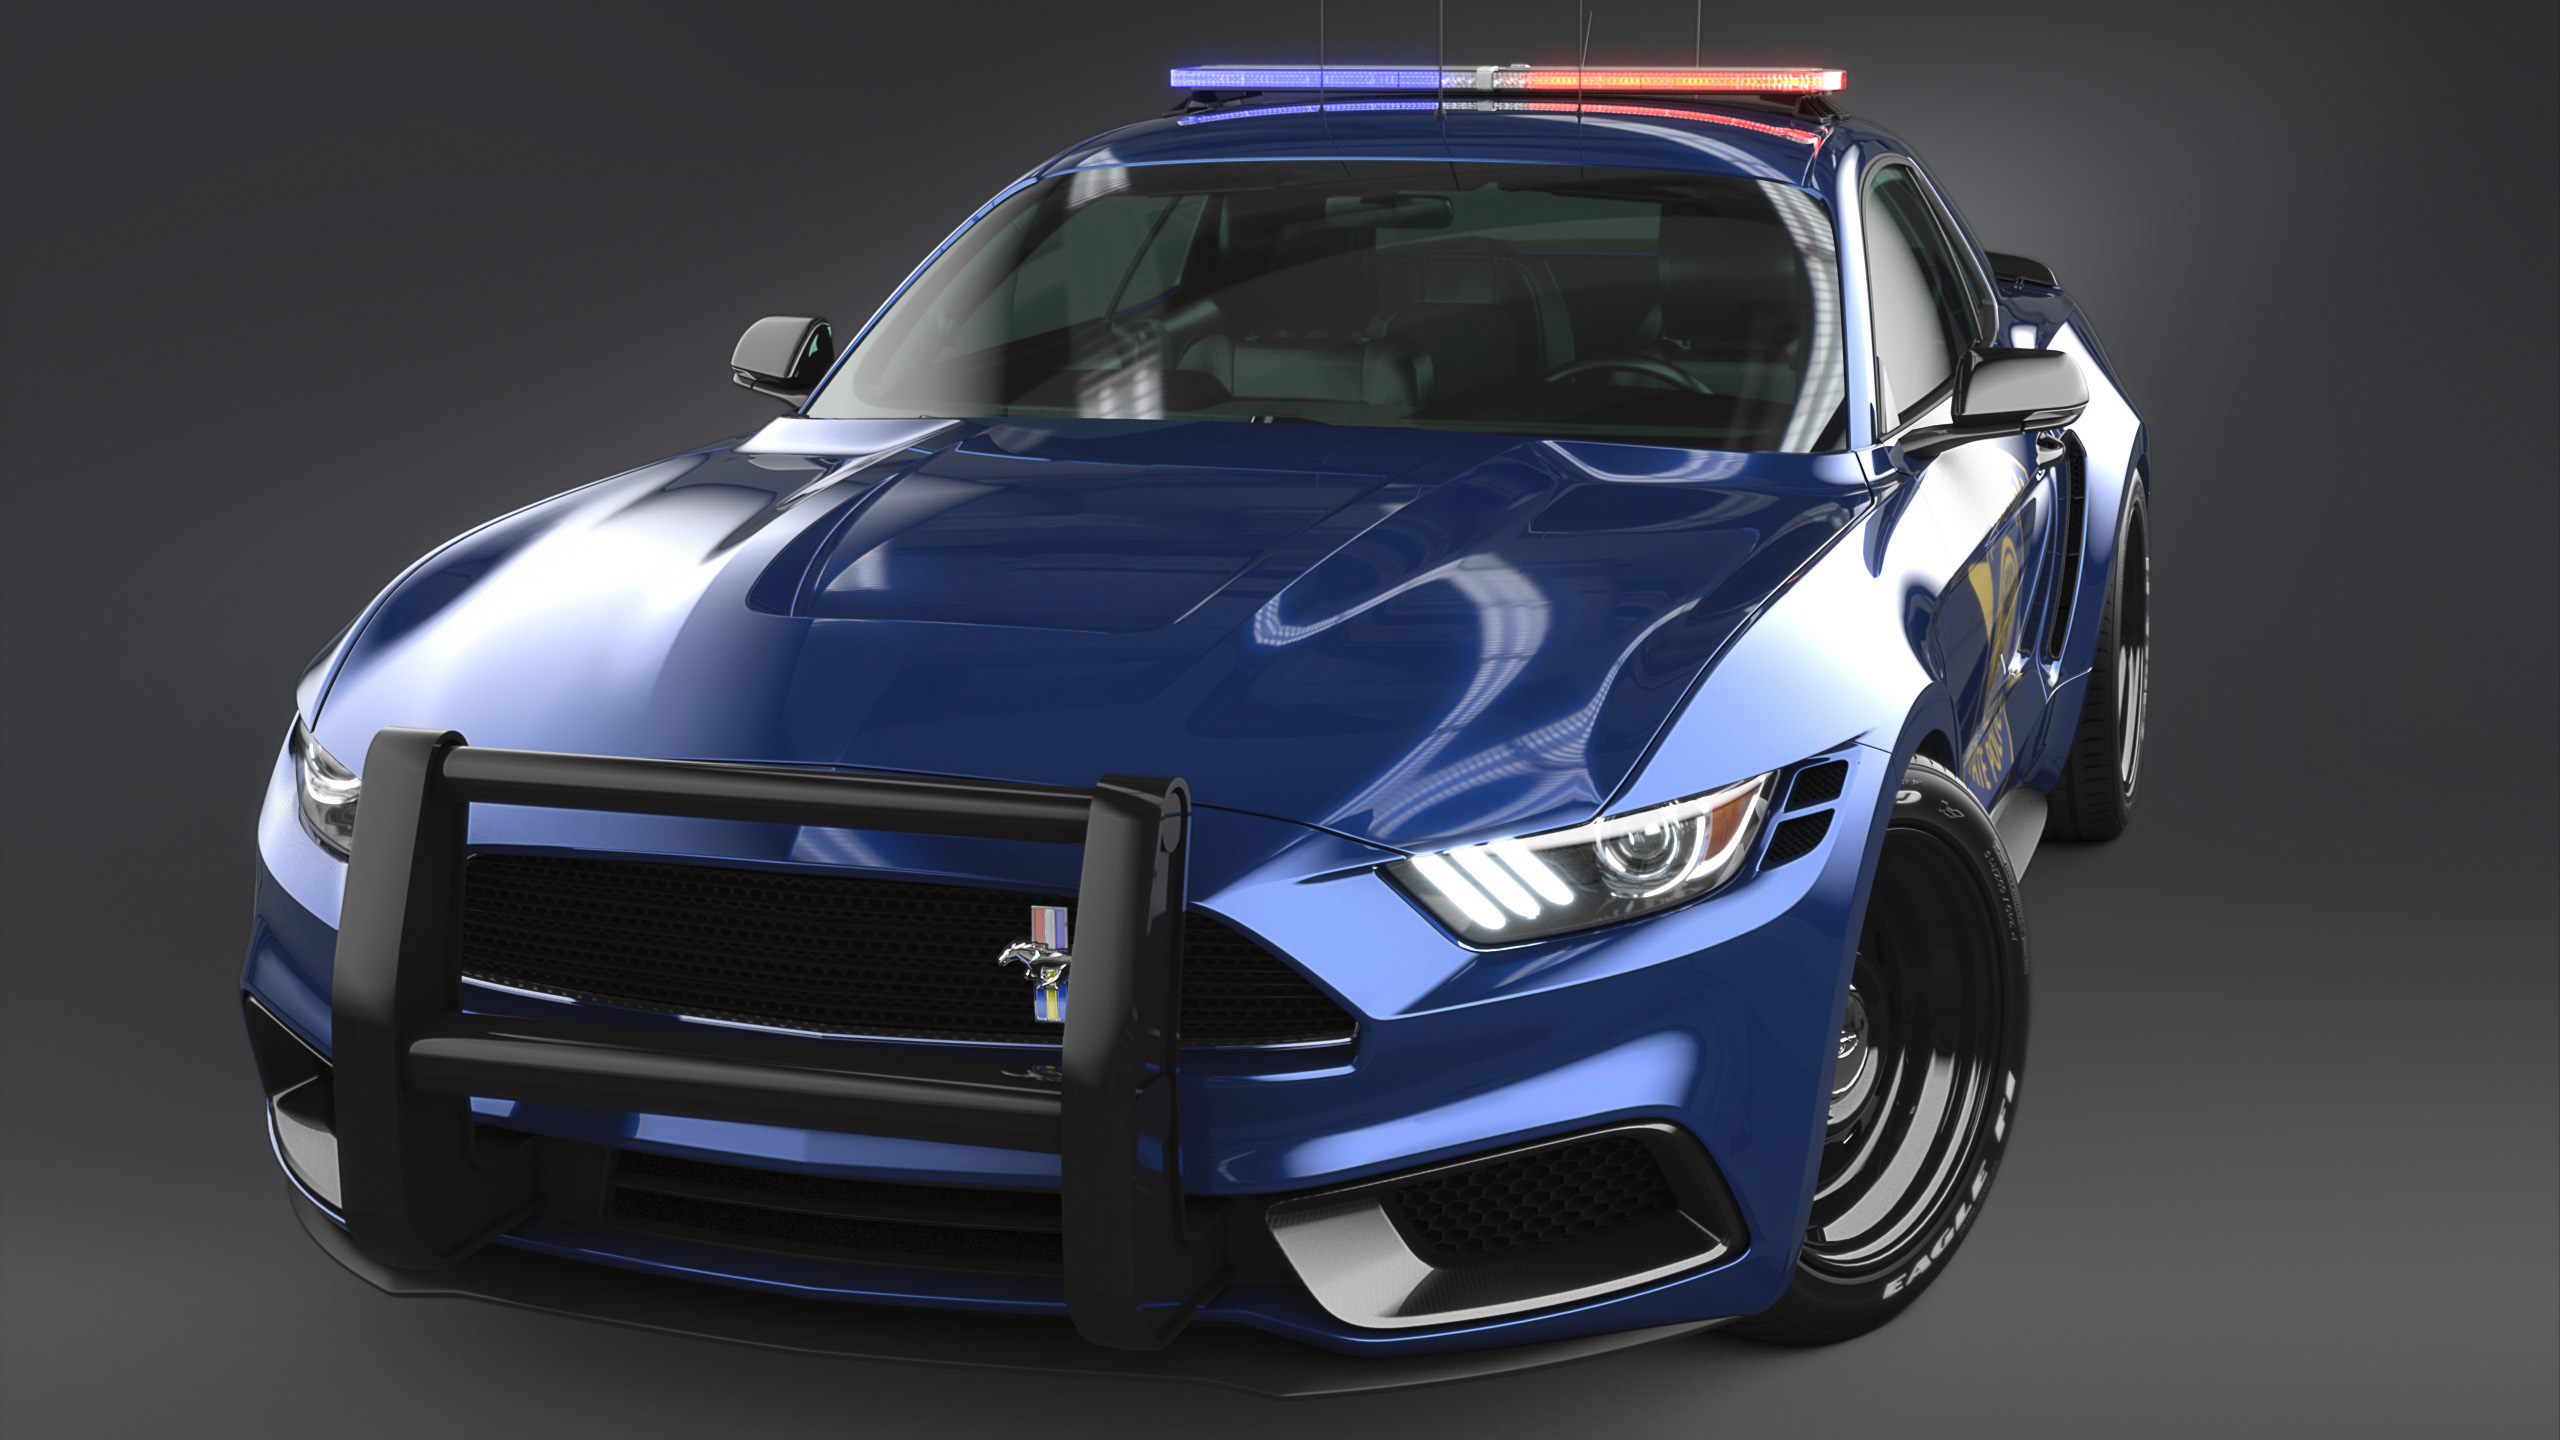 2017 Ford Mustang NotchBack Design Police 3 Wallpaper | HD ...